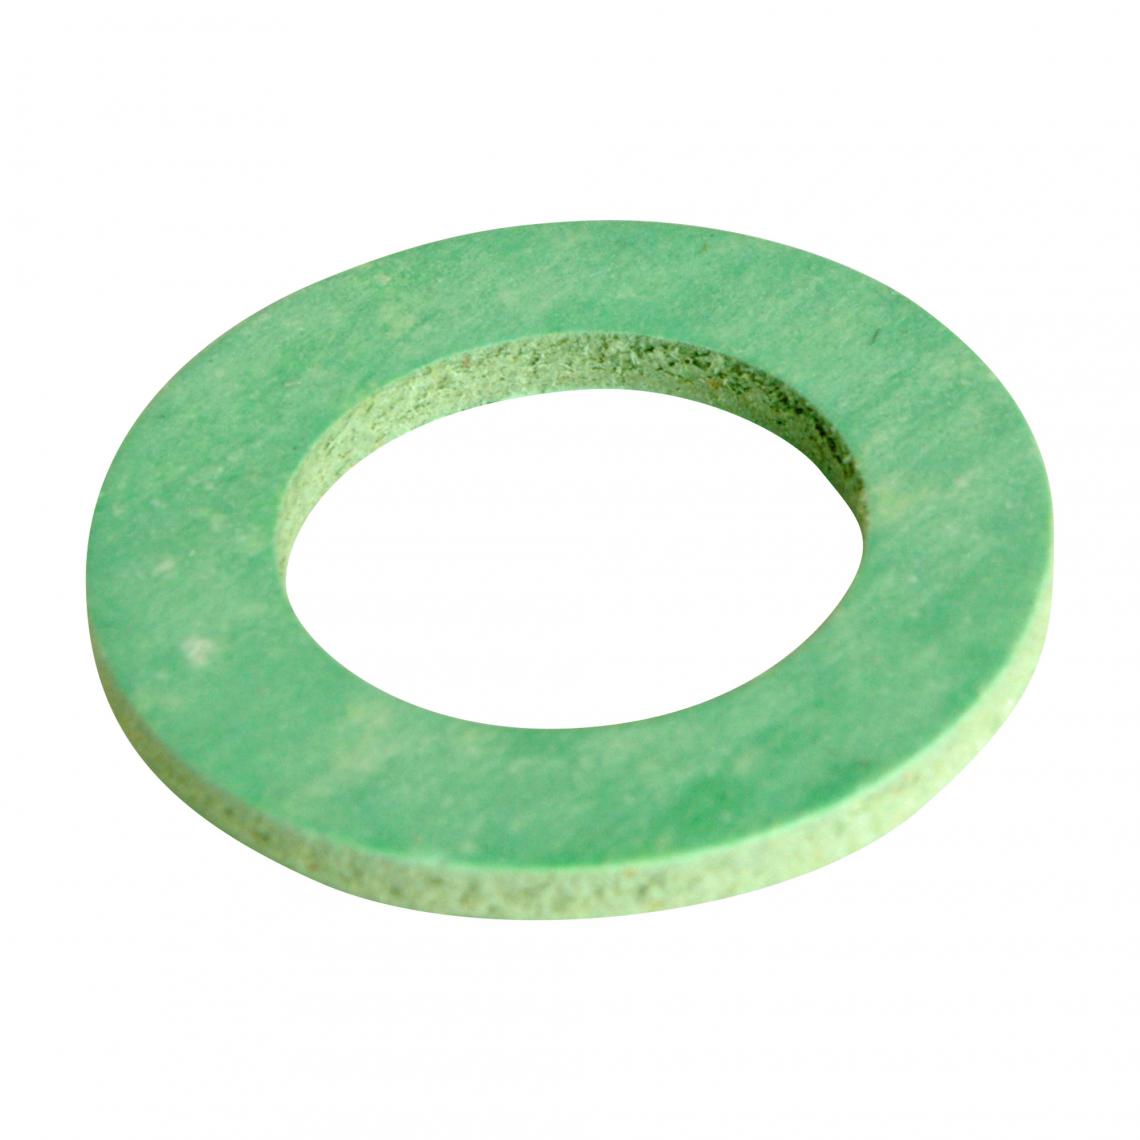 Somatherm For You - Lot de 10 joints fibre vert 12/17 - Mastic, silicone, joint